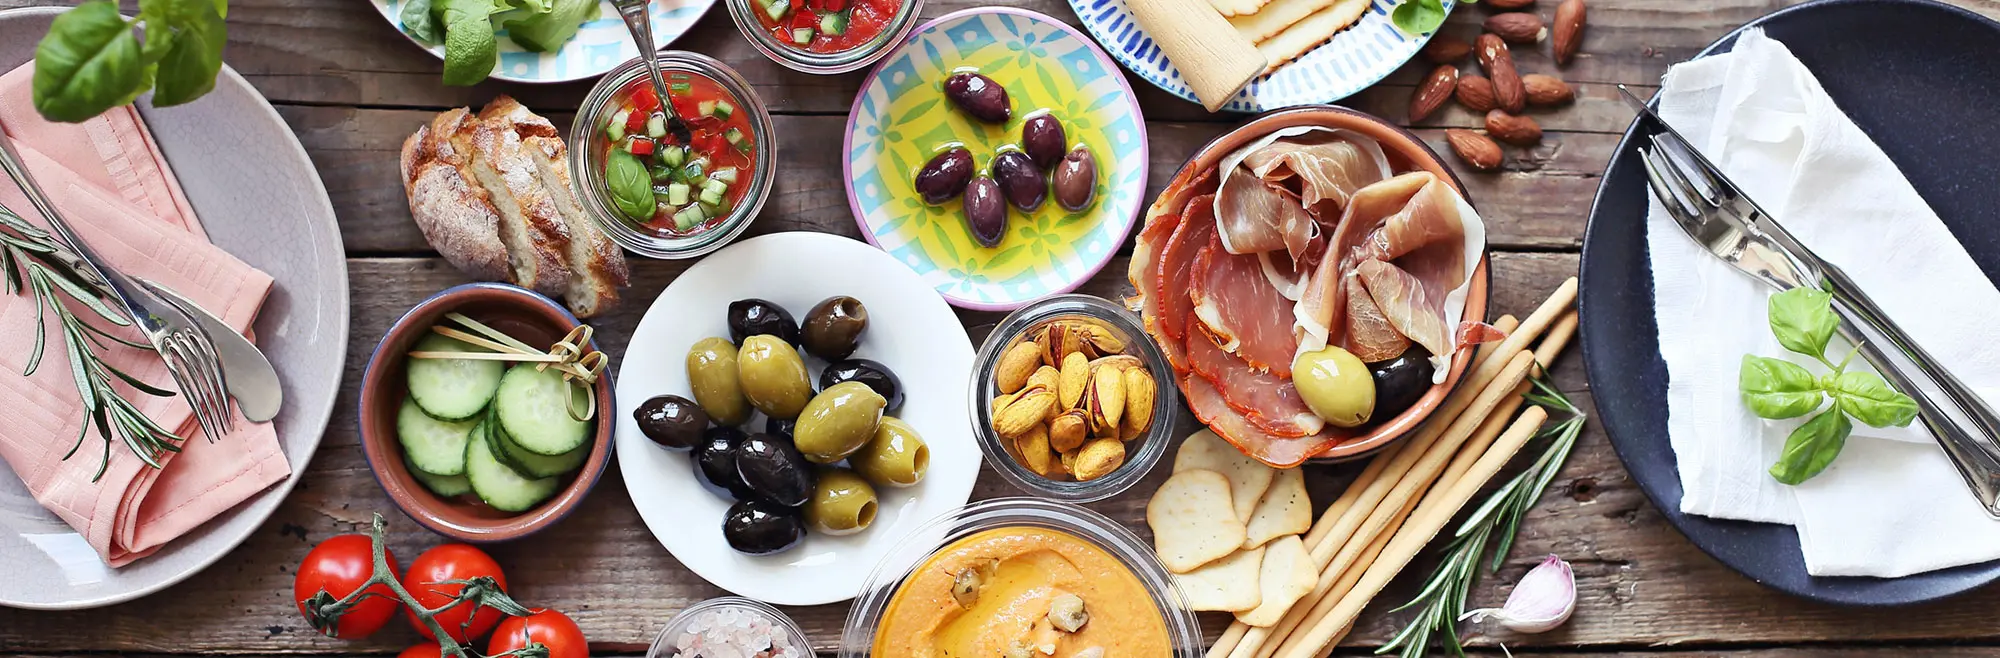 ¿Por qué es tan sana la dieta mediterránea?